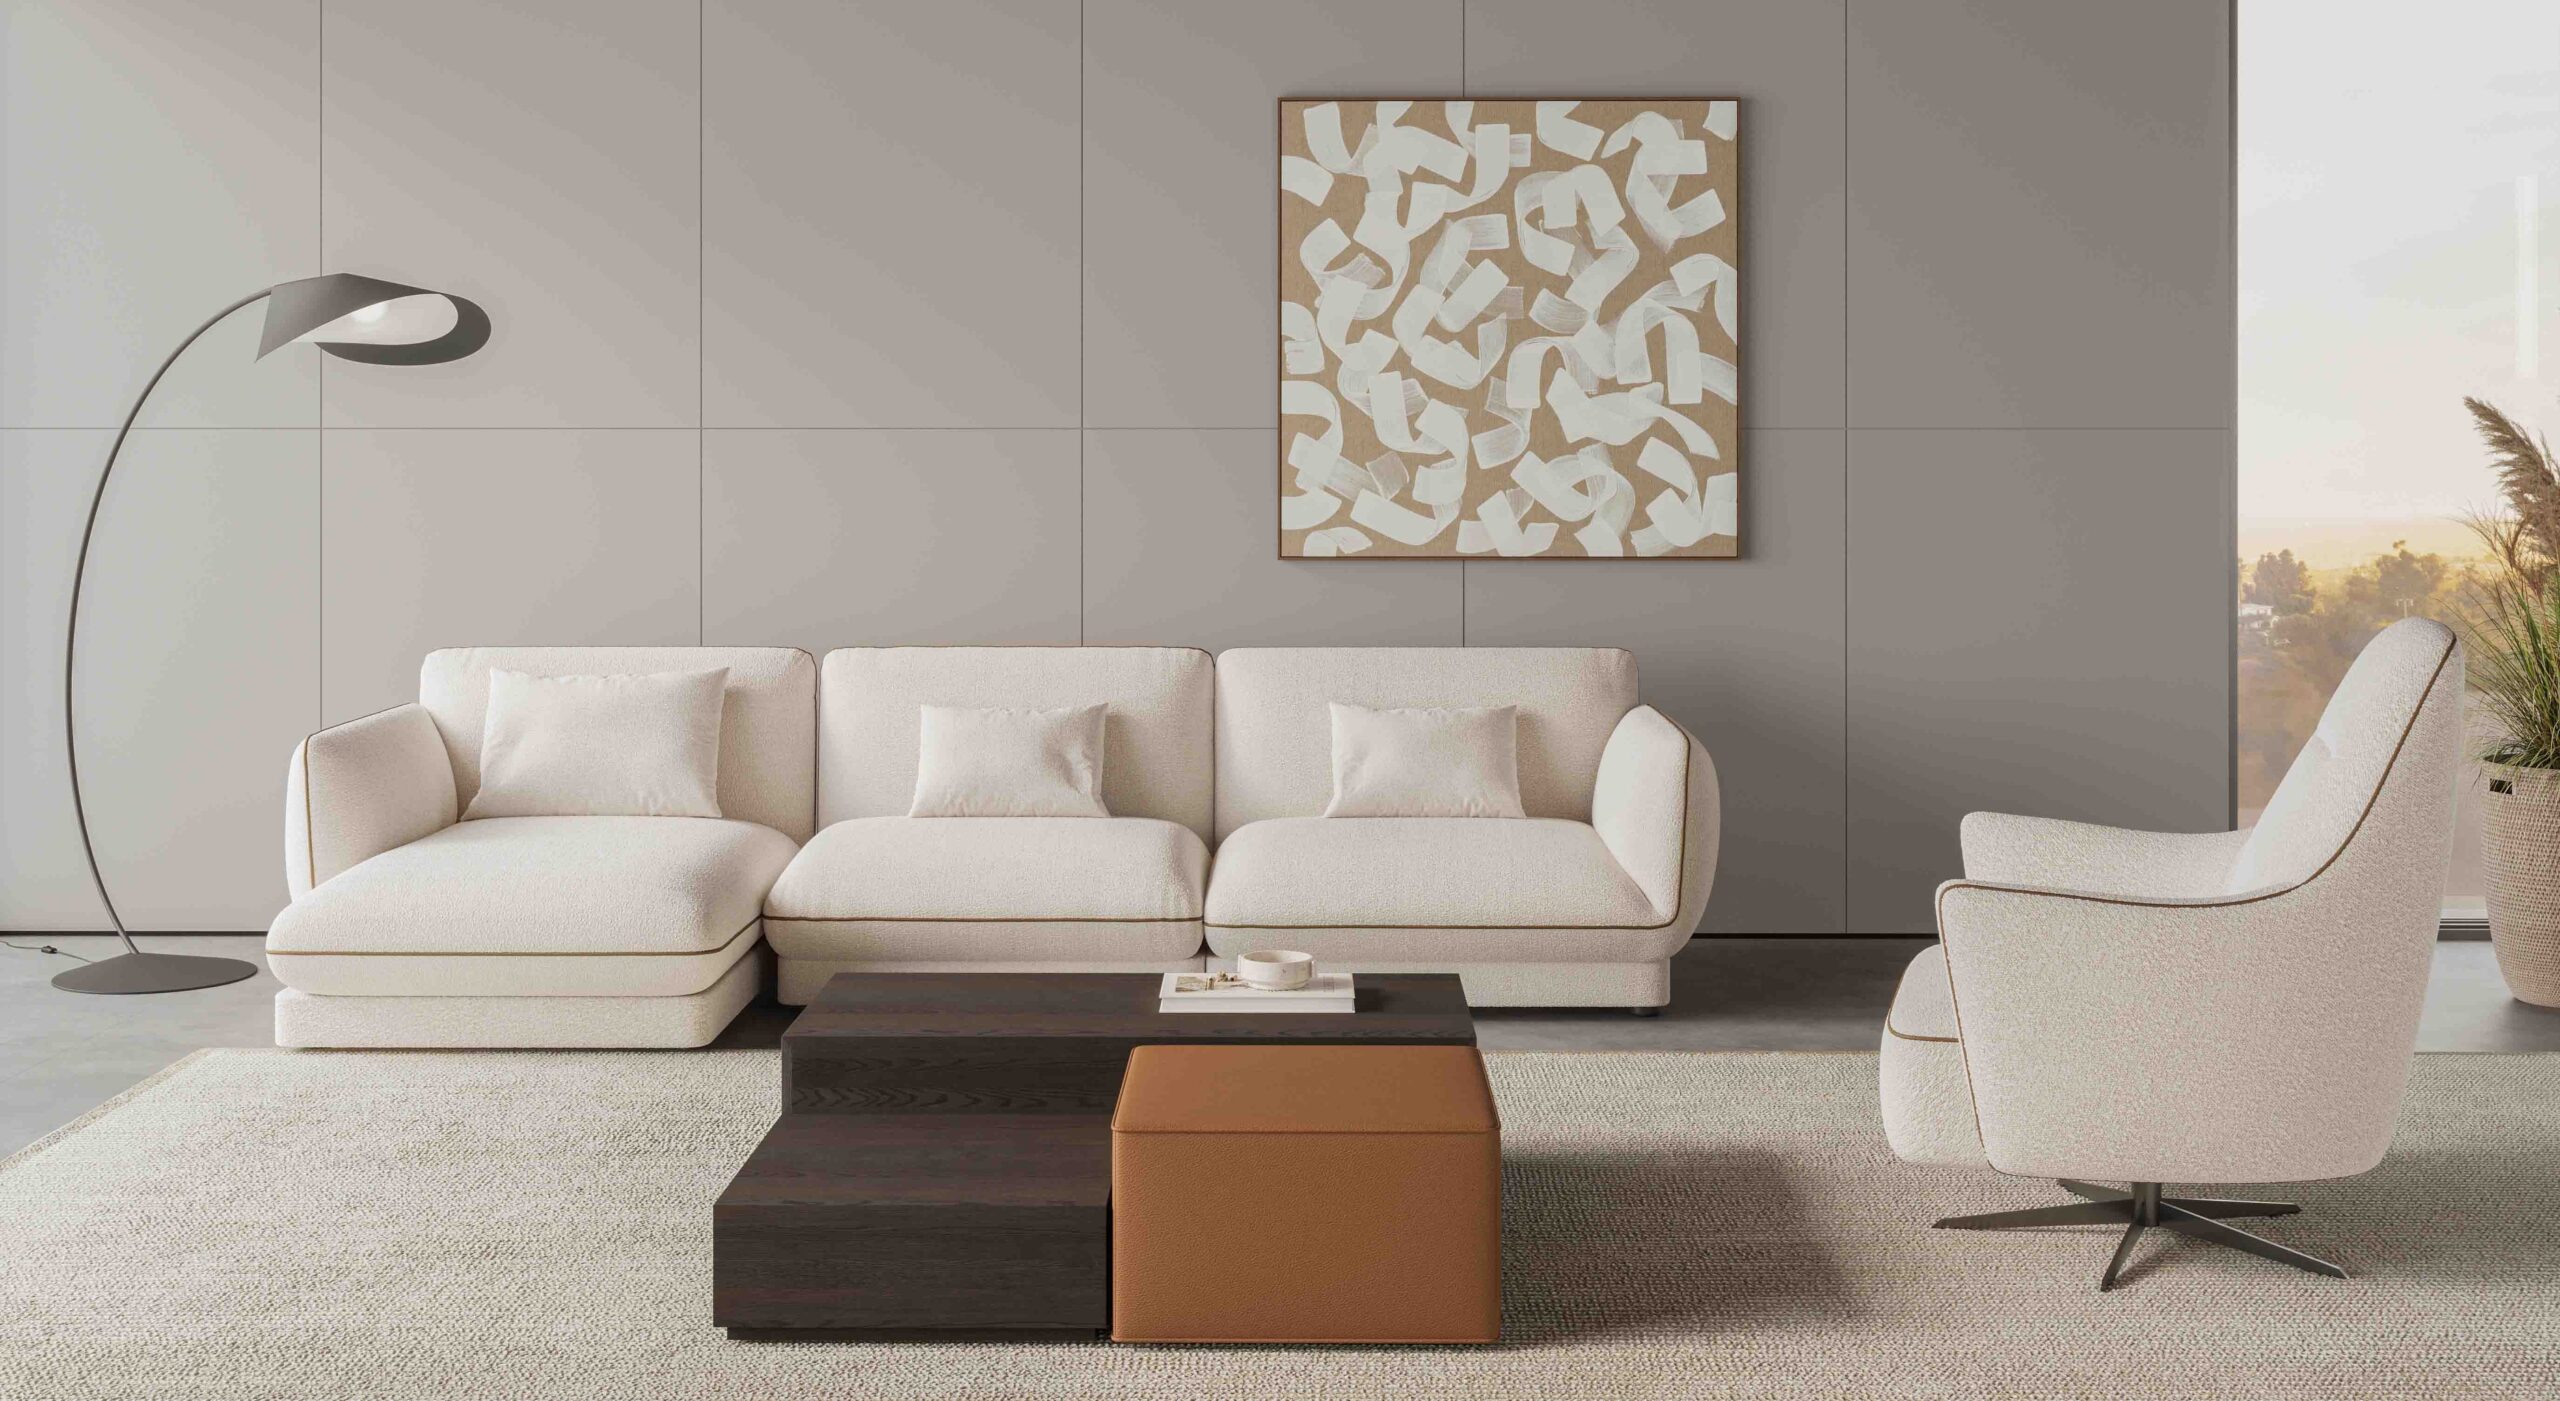 loretta-design sofa-Design zetels op maat-hoeksofa-meubelwinkel-interieurzaak-Slide